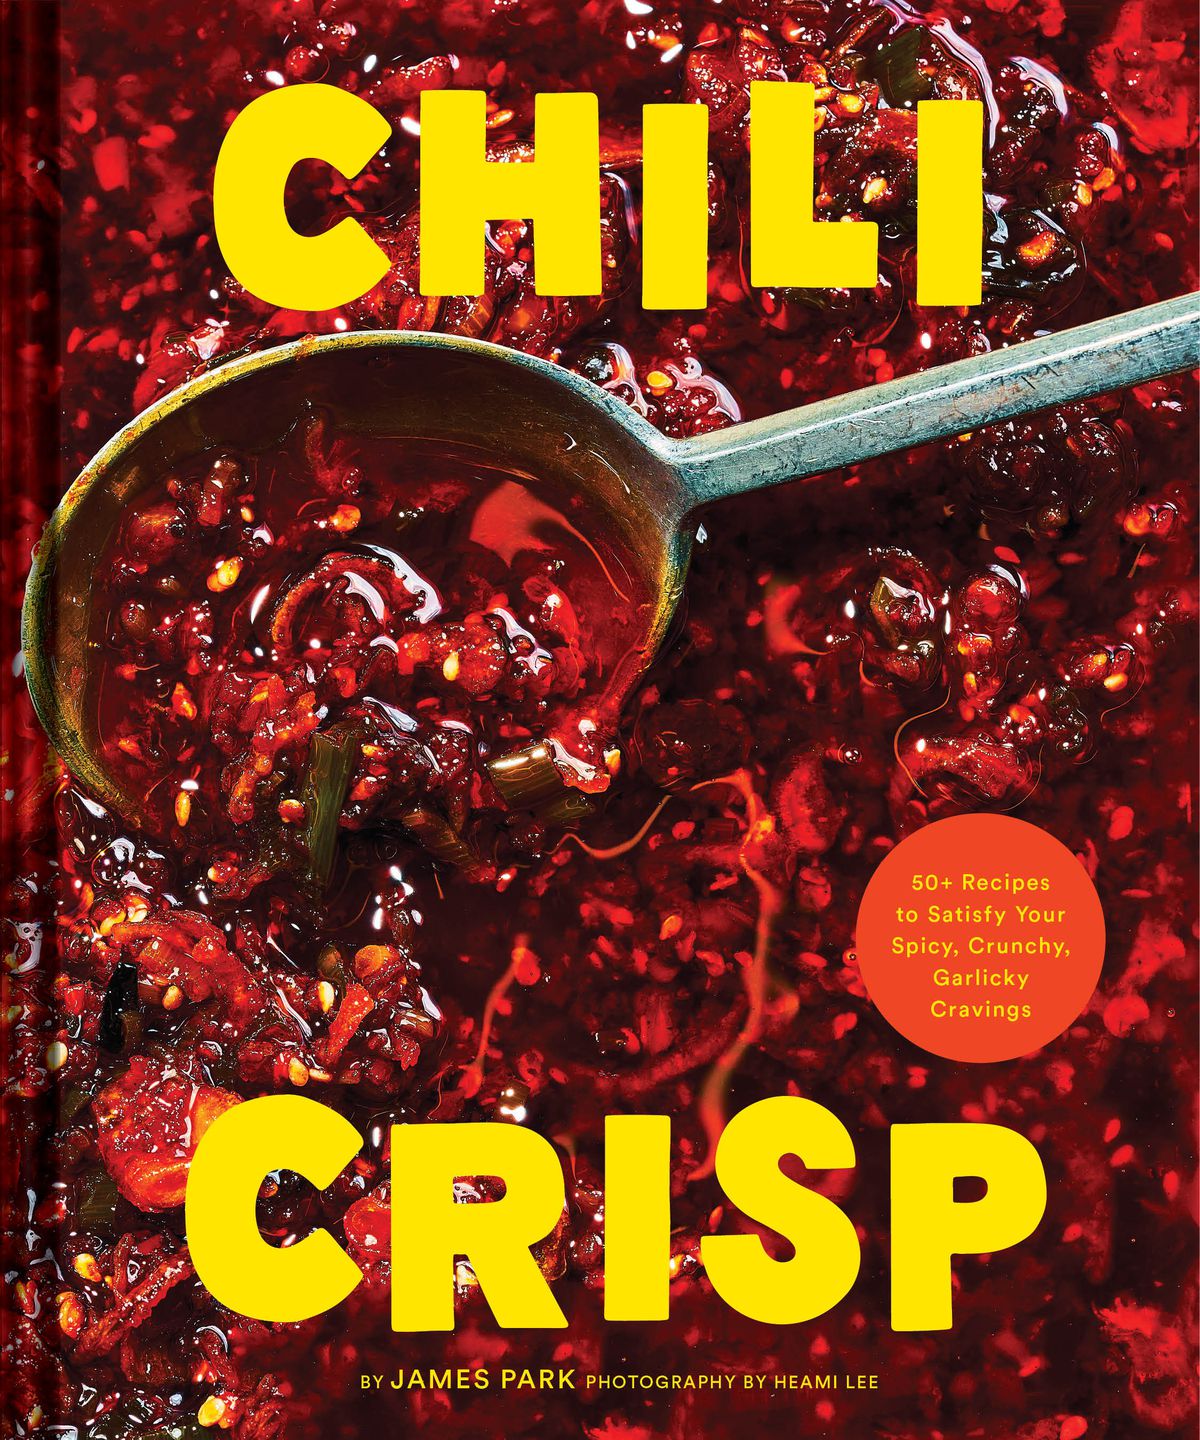 The cover of the cookbook “Chili Crisp”